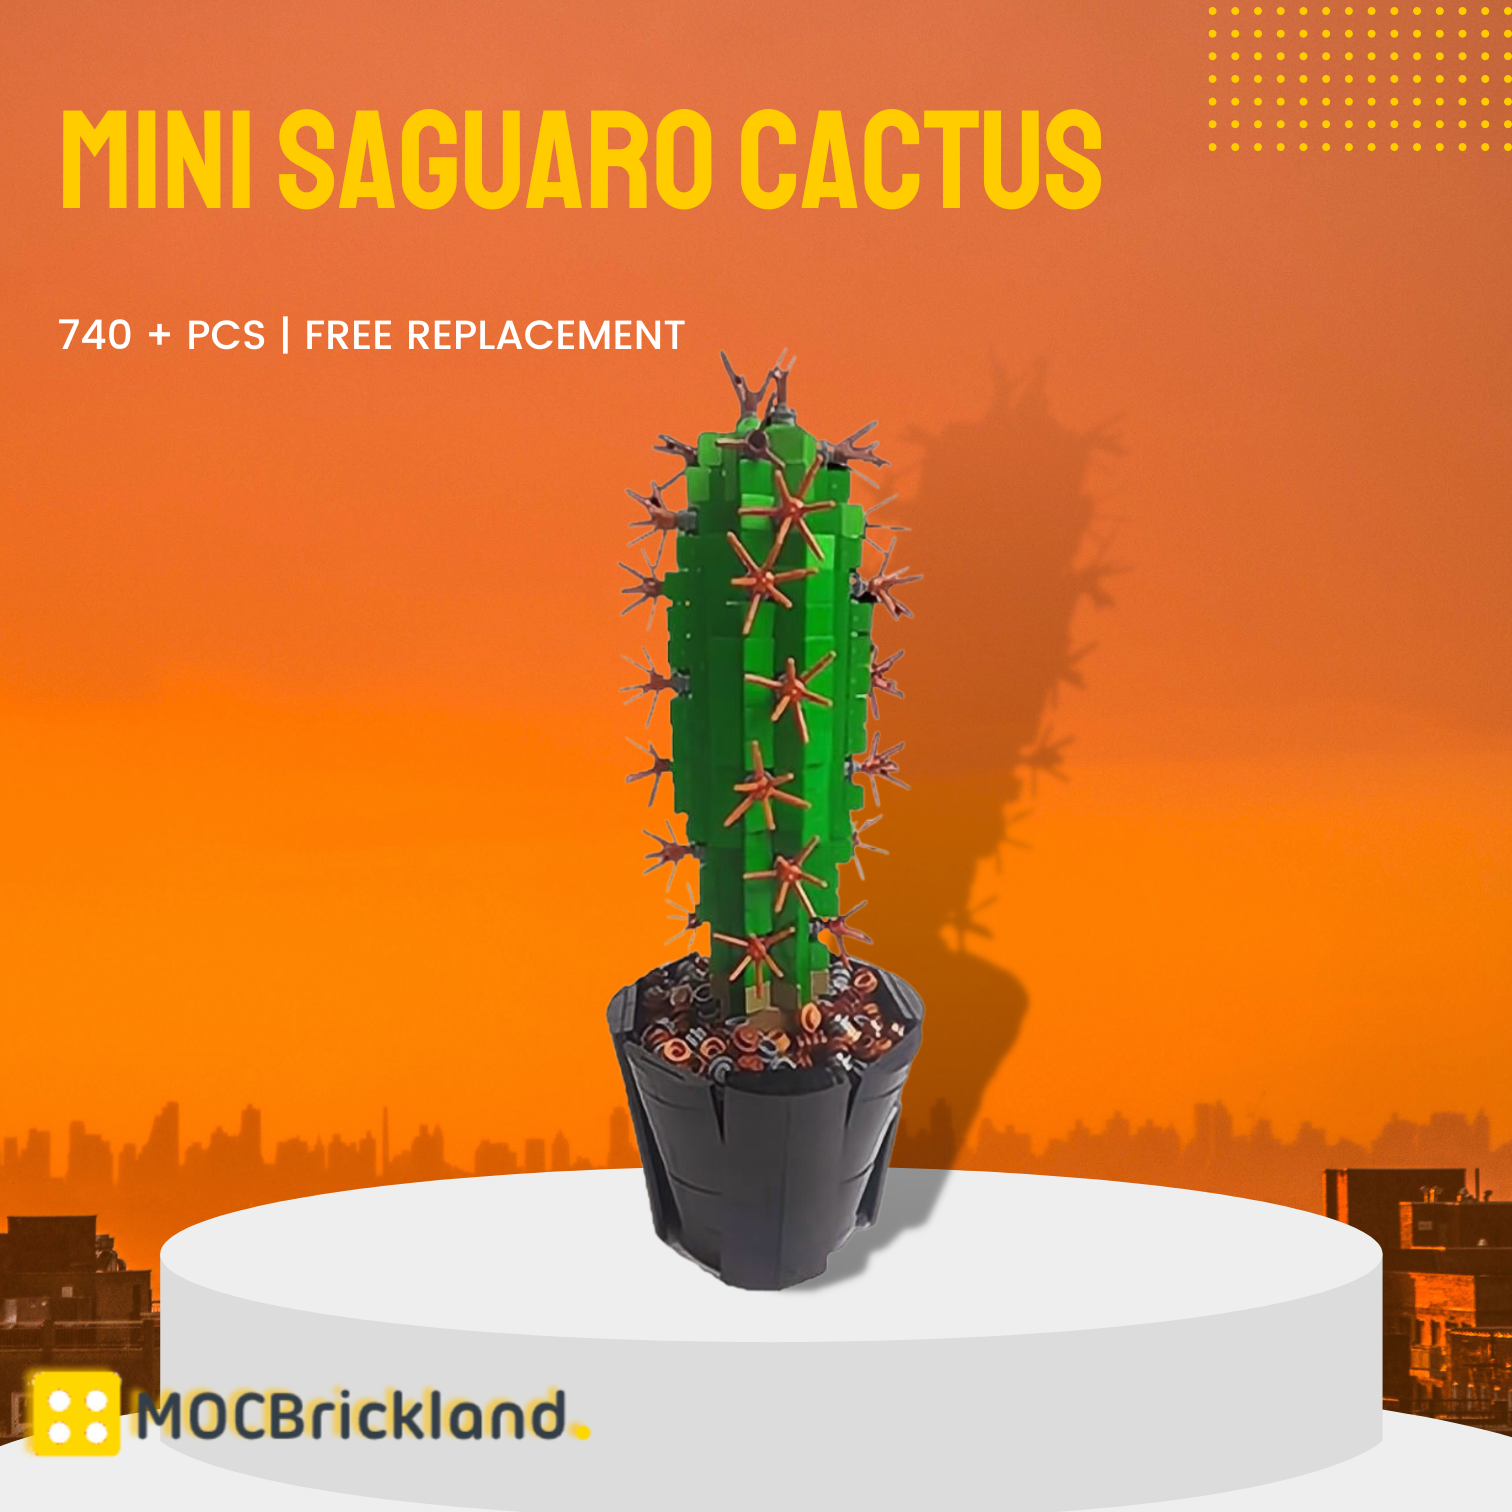 Creator MOC-118883 Mini Saguaro Cactus (Carnegiea Gigantea) MOCBRICKLAND